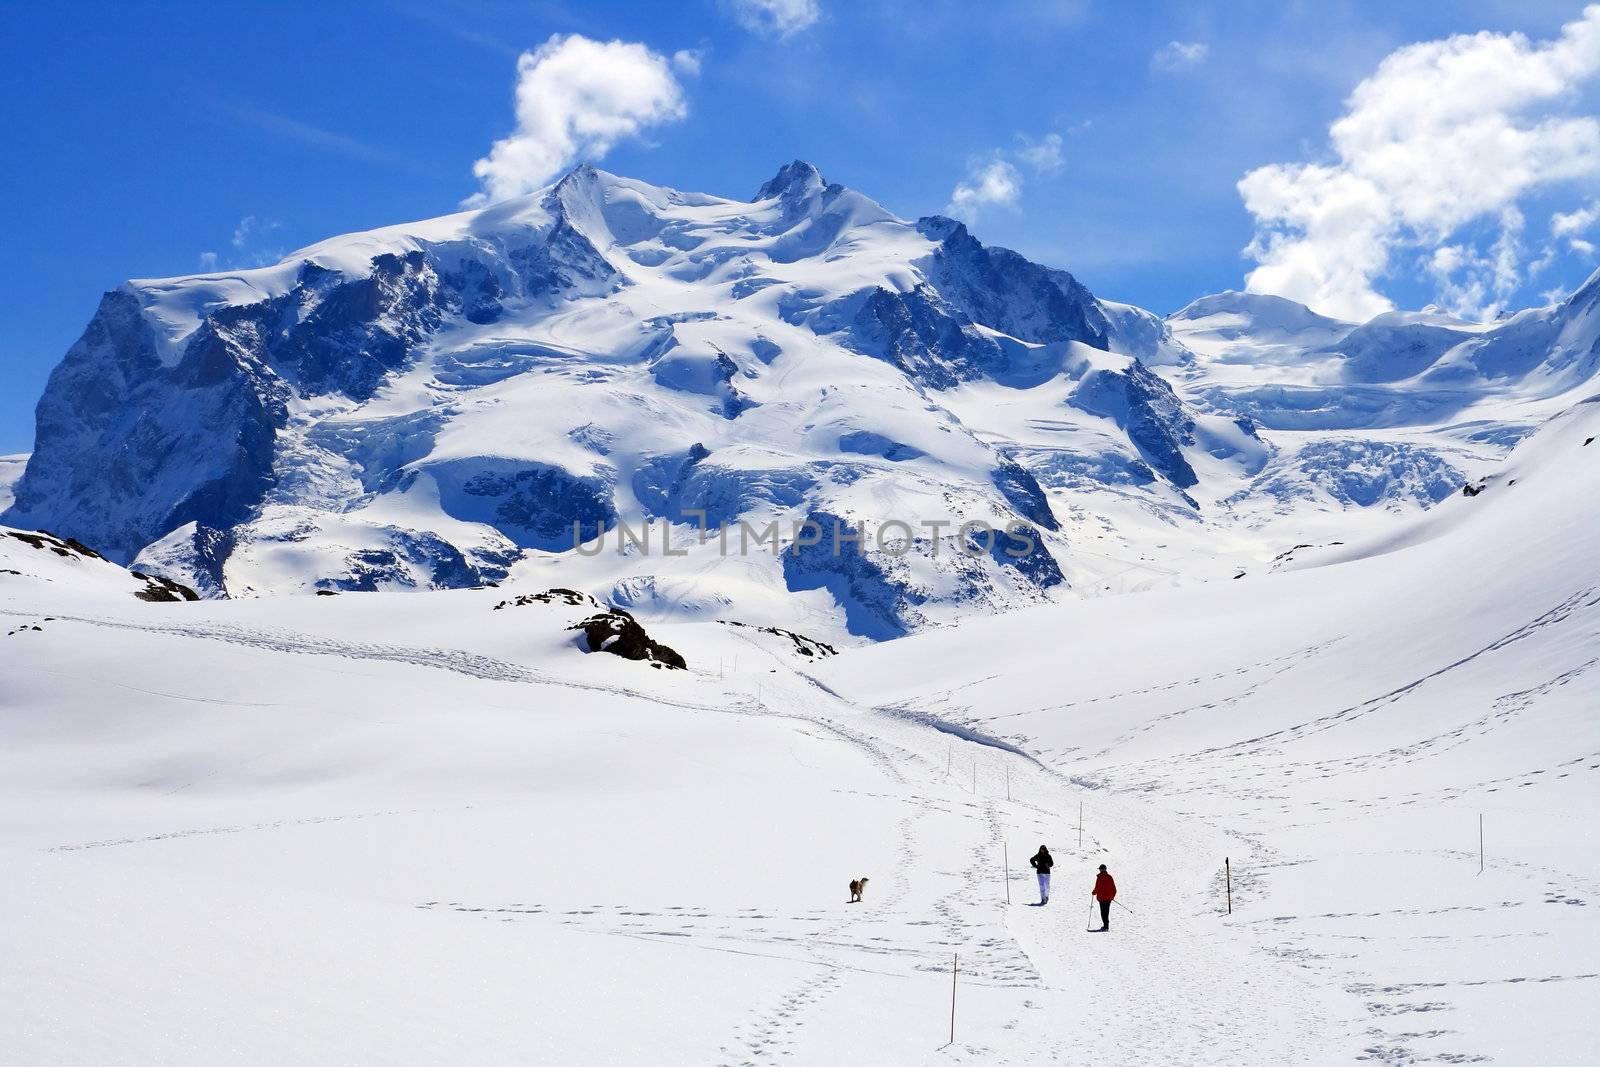 hiking Path at Matterhorn Switzerland by vichie81